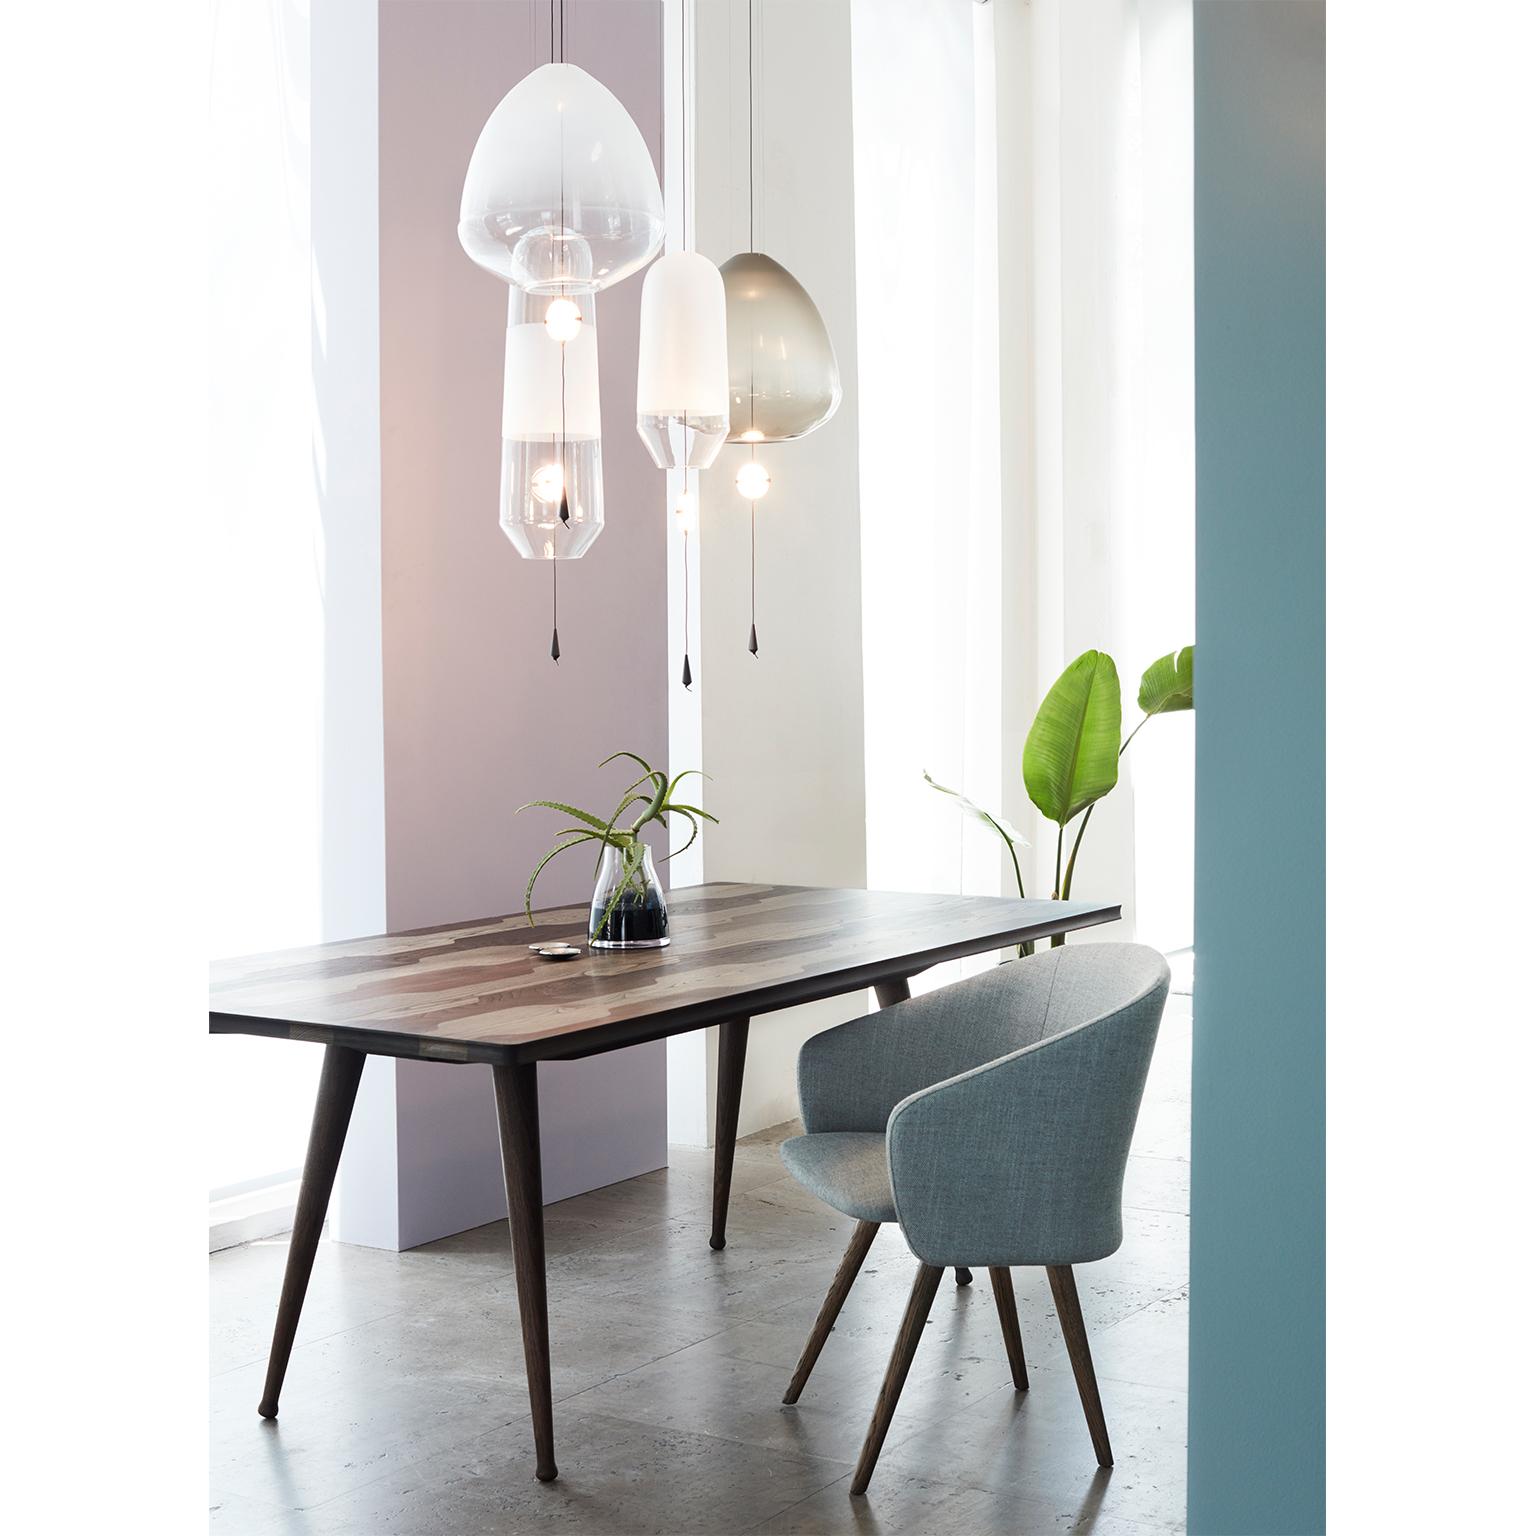 Limpid Light S Rosequartz Standard, Pink Decorative Light, Hand Blown Glass 1